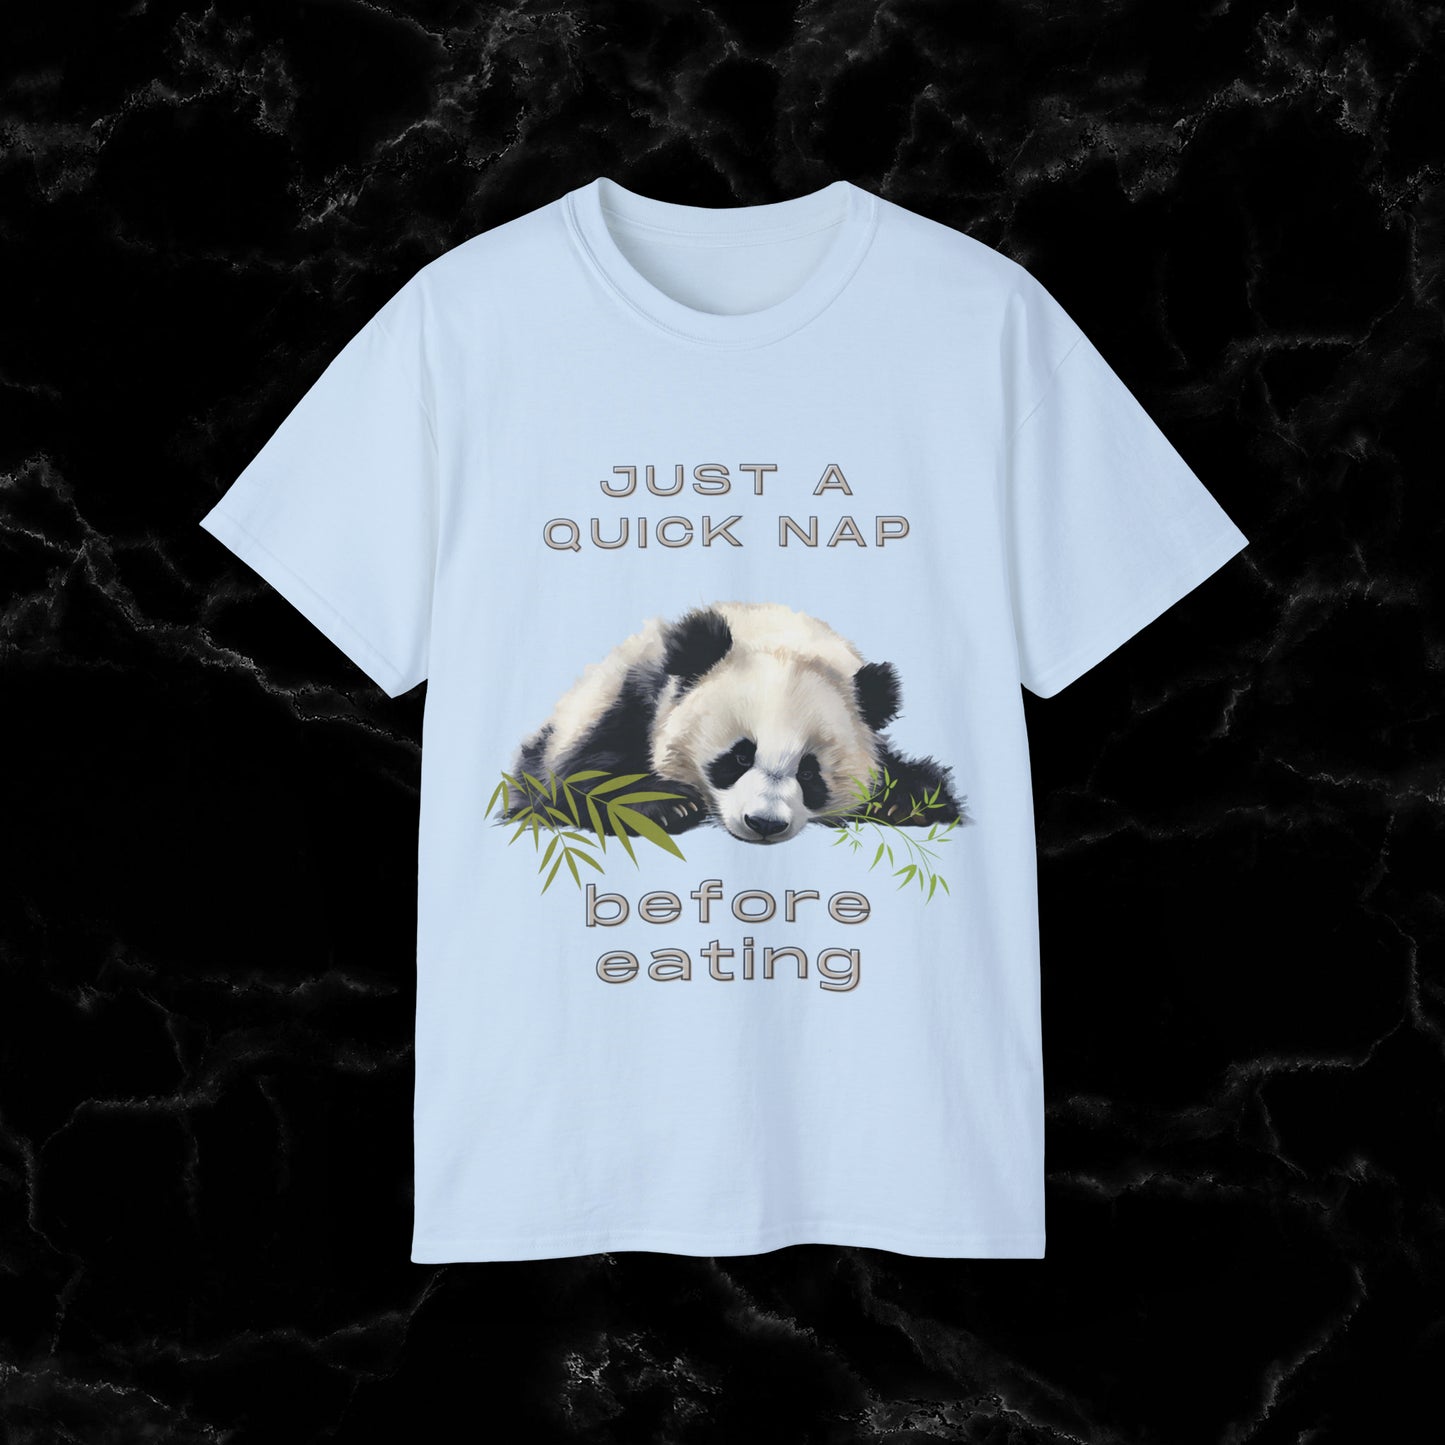 Nap Time Panda Unisex Funny Tee - Hilarious Panda Nap Design - Just a Quick Nap Before Eating T-Shirt Light Blue S 